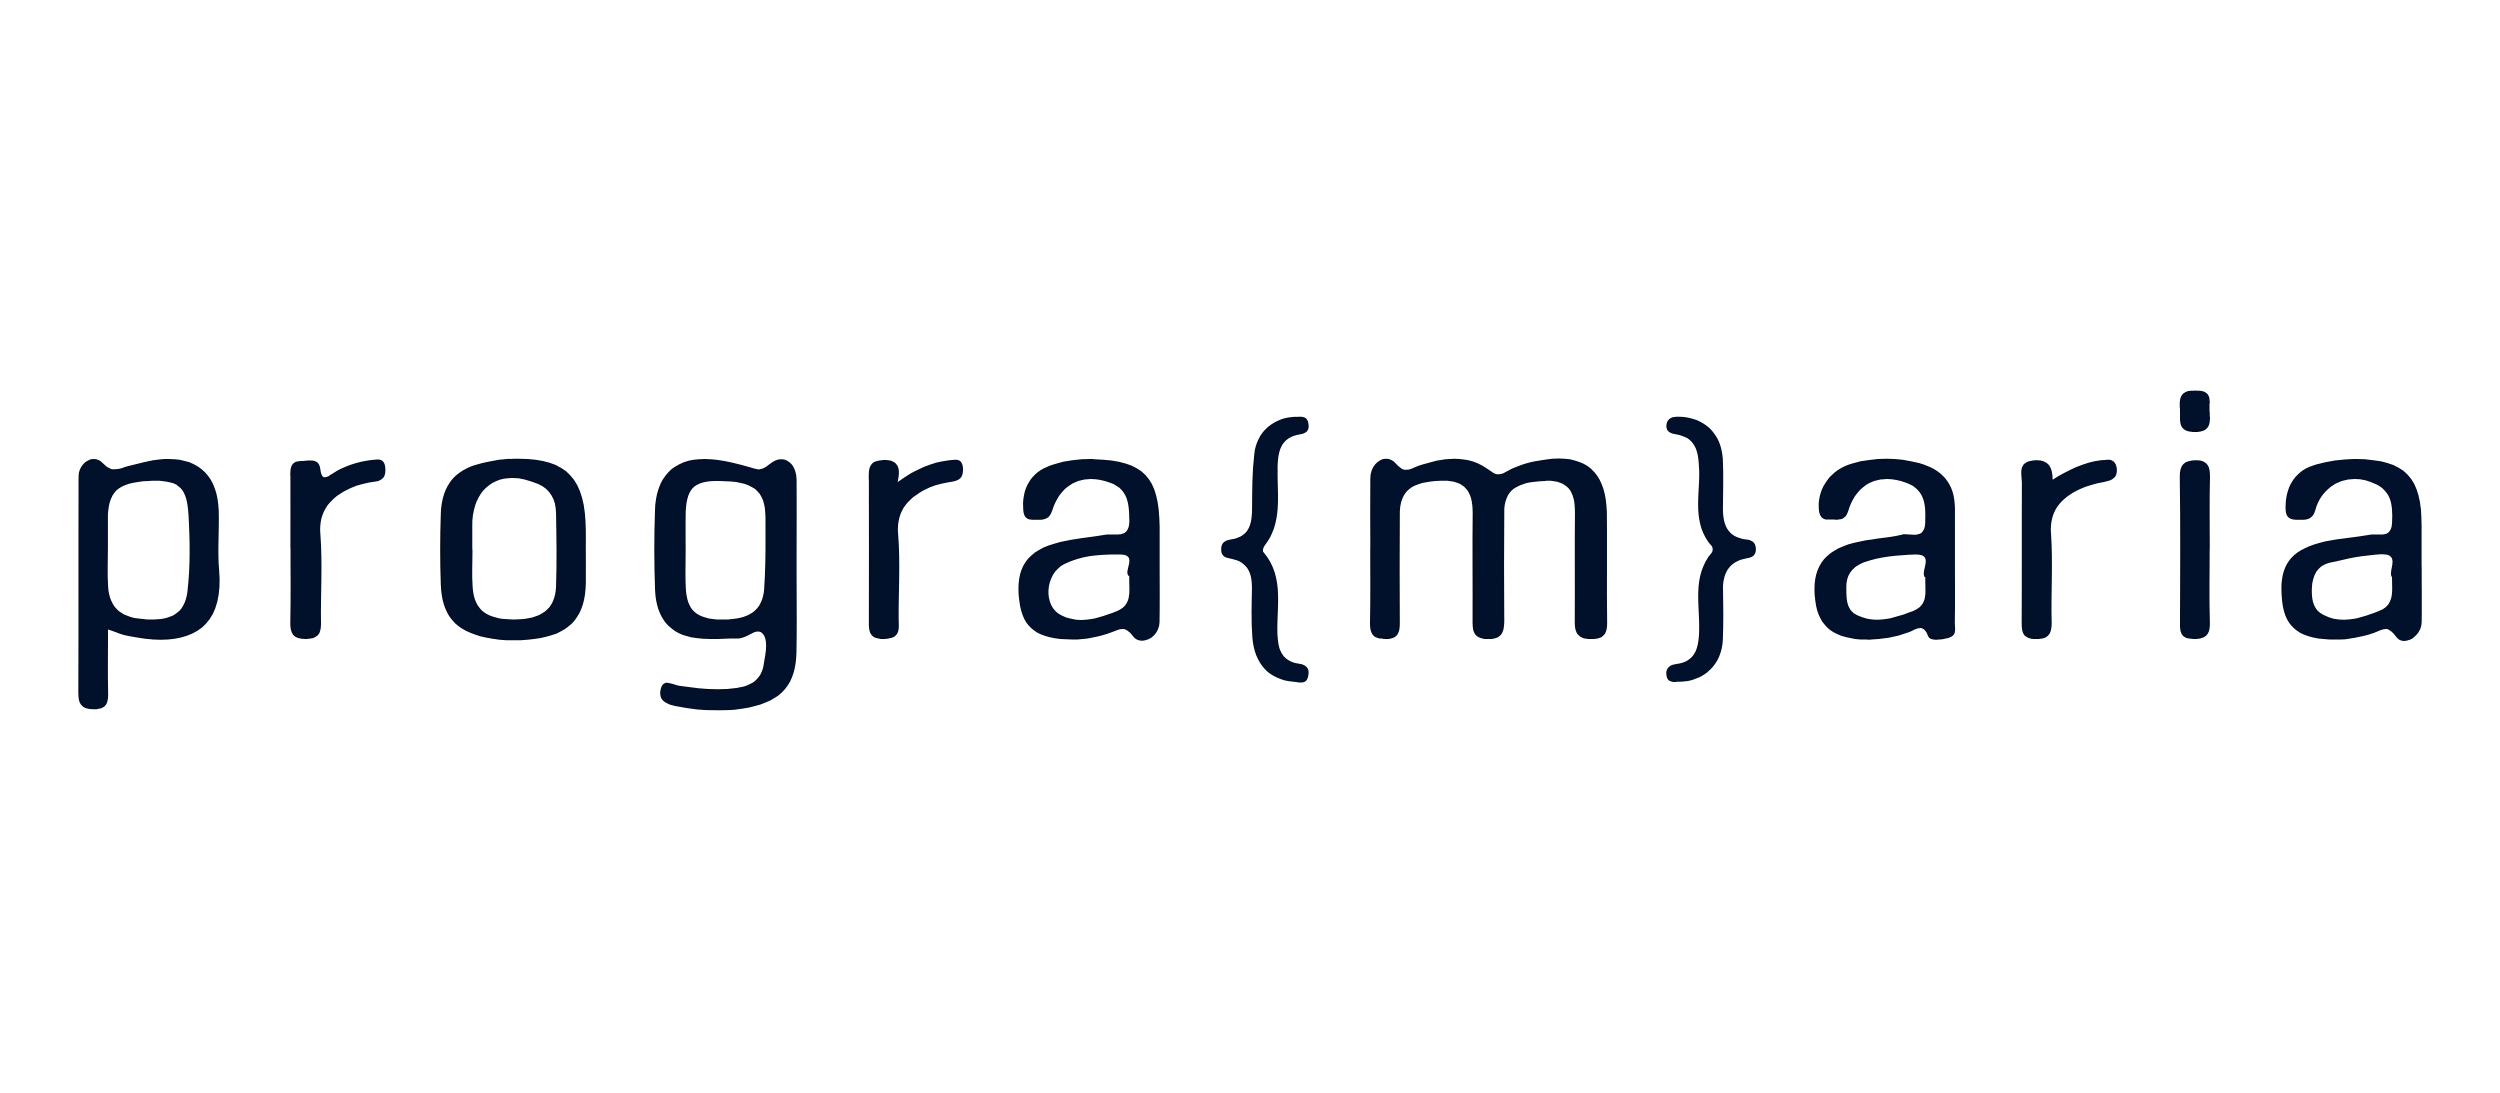 Programaria logo